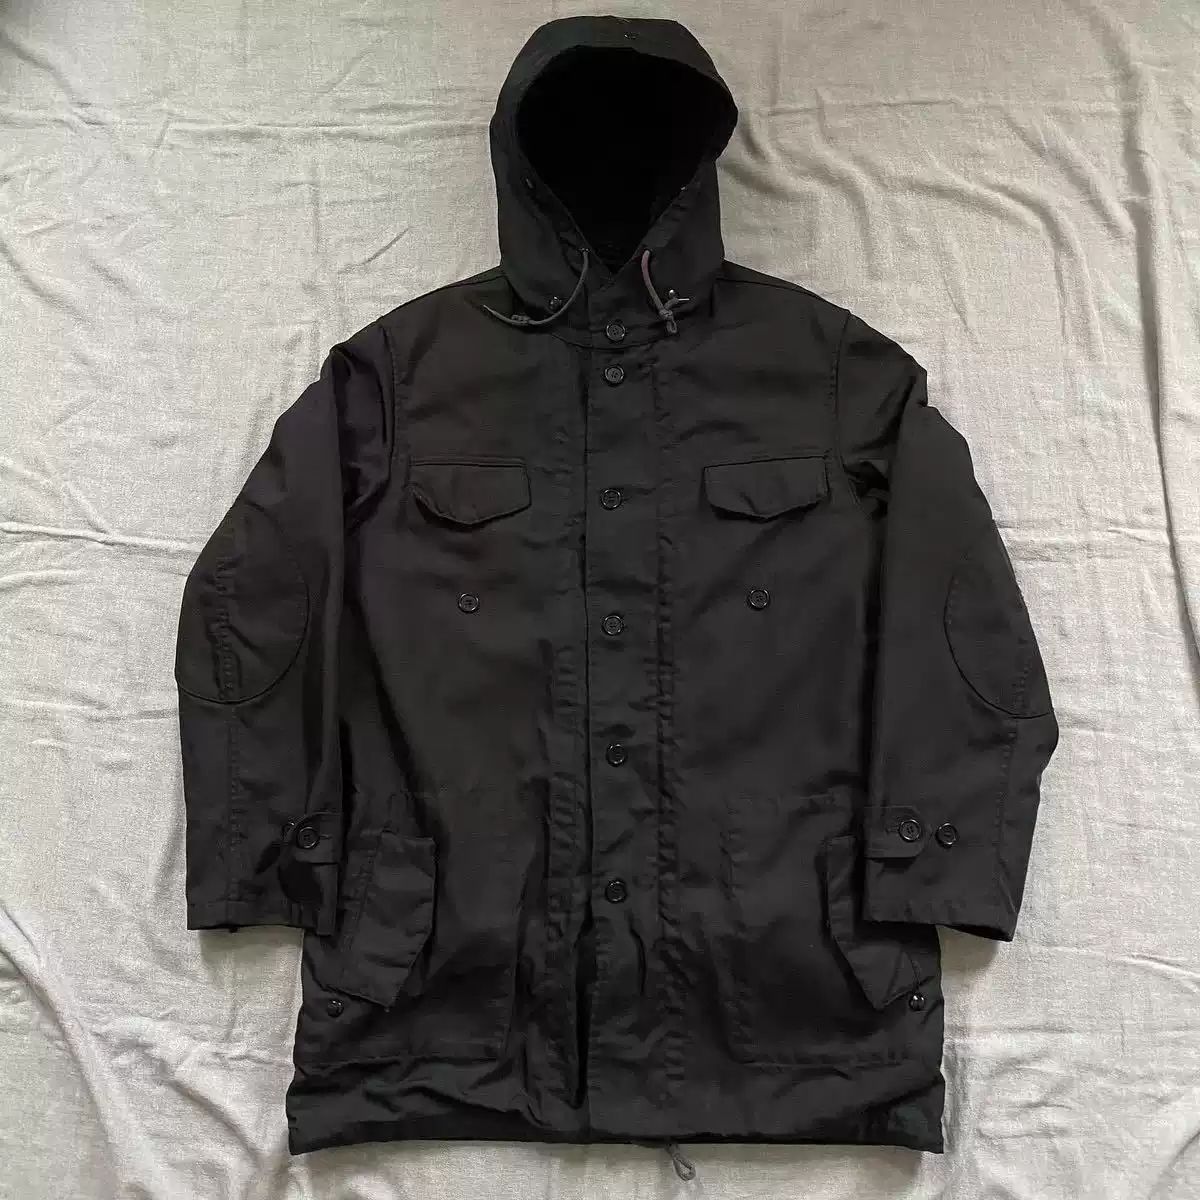 Helmut Lang Helmut Lang 1998 overcoat trench coat Mmur65 jacket archive vintage collection Size US M / EU 48-50 / 2 - 1 Preview